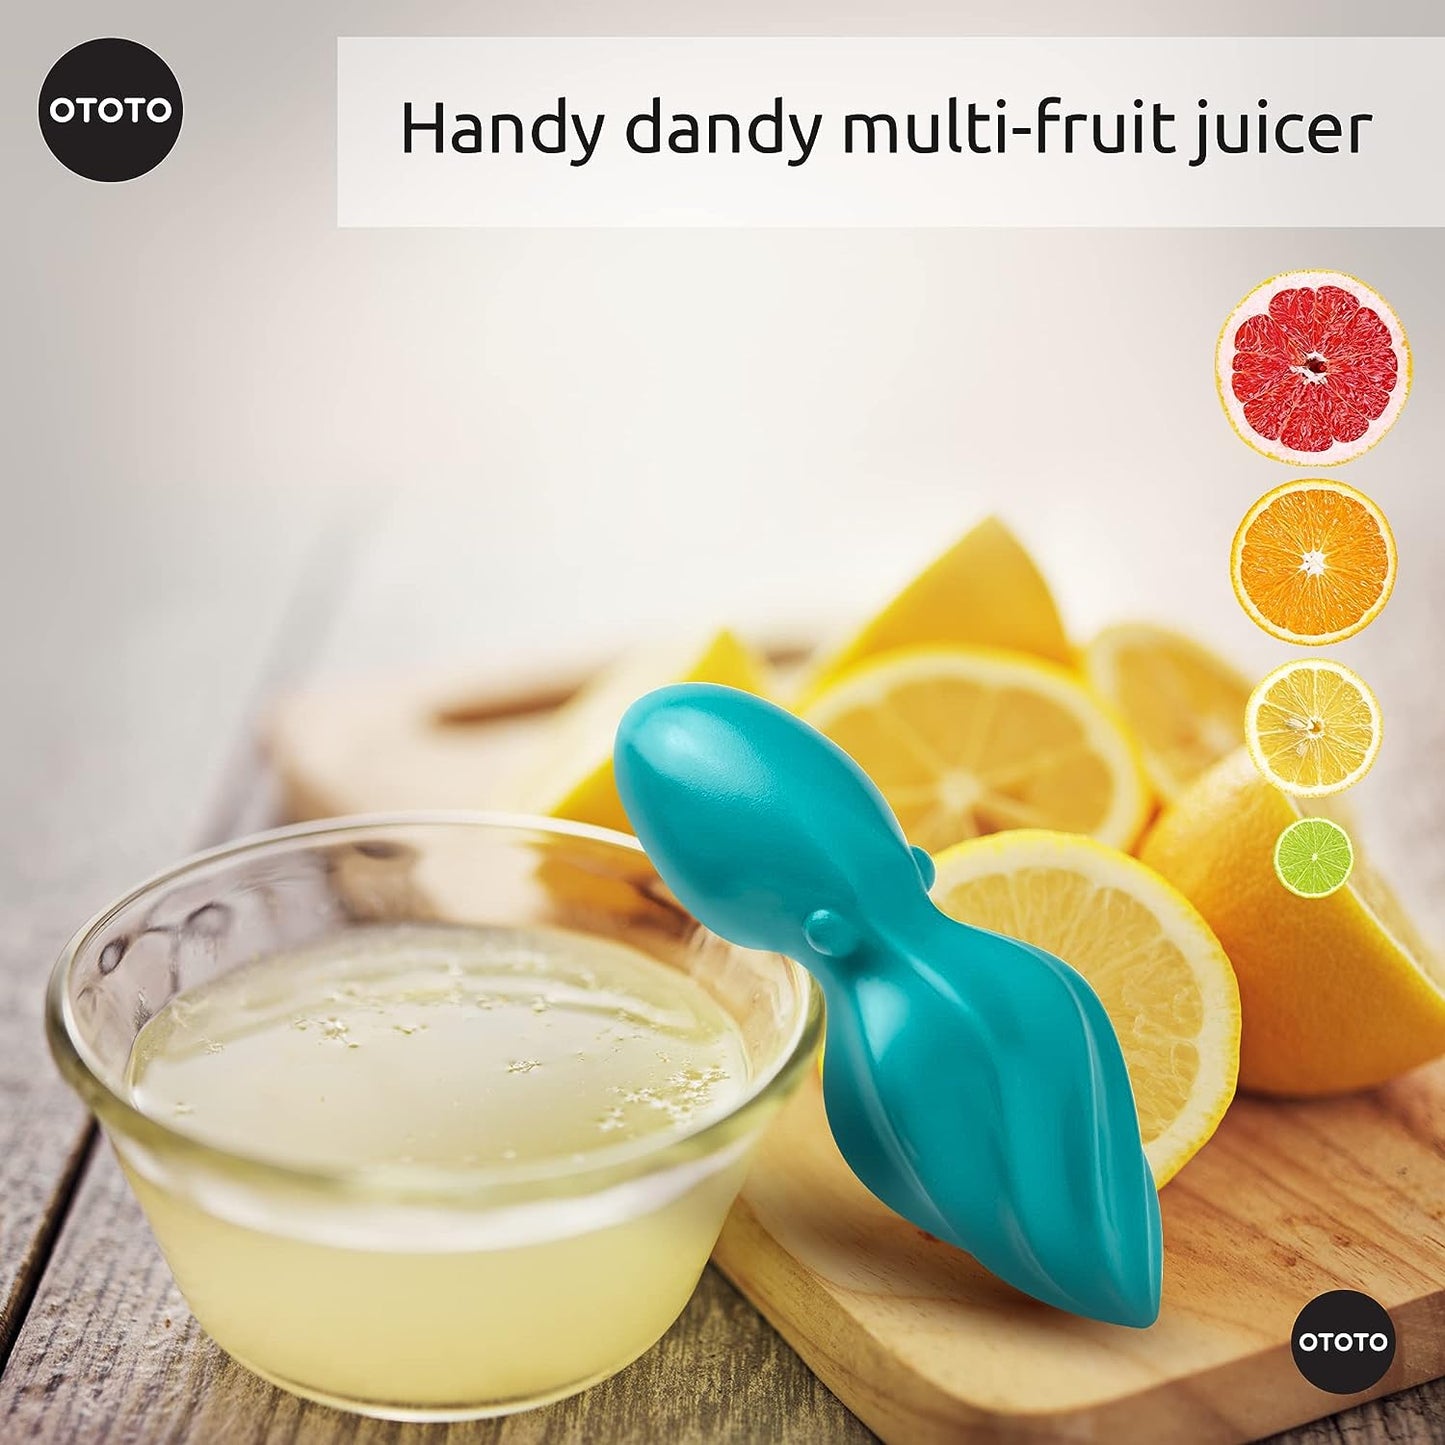 Special Lemon Juicer Hand - Easy to Hold Lemon Squeezer Manual for Lemon, Lime, Oranges - BPA Free, Dishwasher Safe Citrus Juicer Hand Press Manual - Fun Kitchen Gadgets & Tools - (1.85"x6.77")